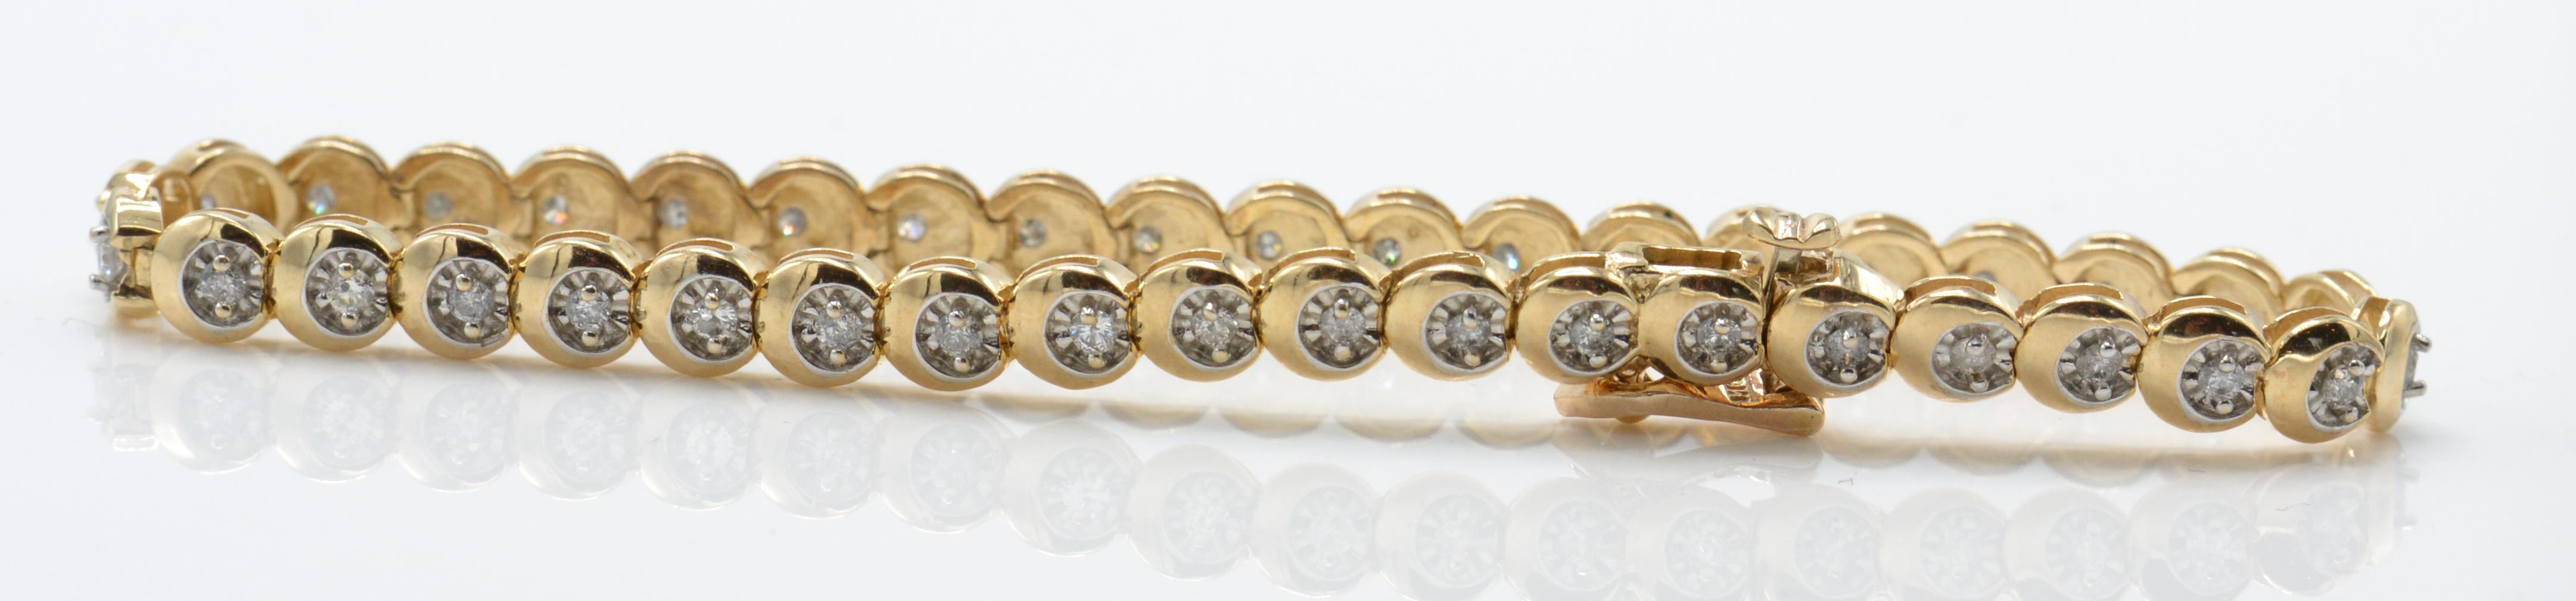 A hallmarked 9ct gold and diamond tennis bracelet with 40 brilliant cut diamonds